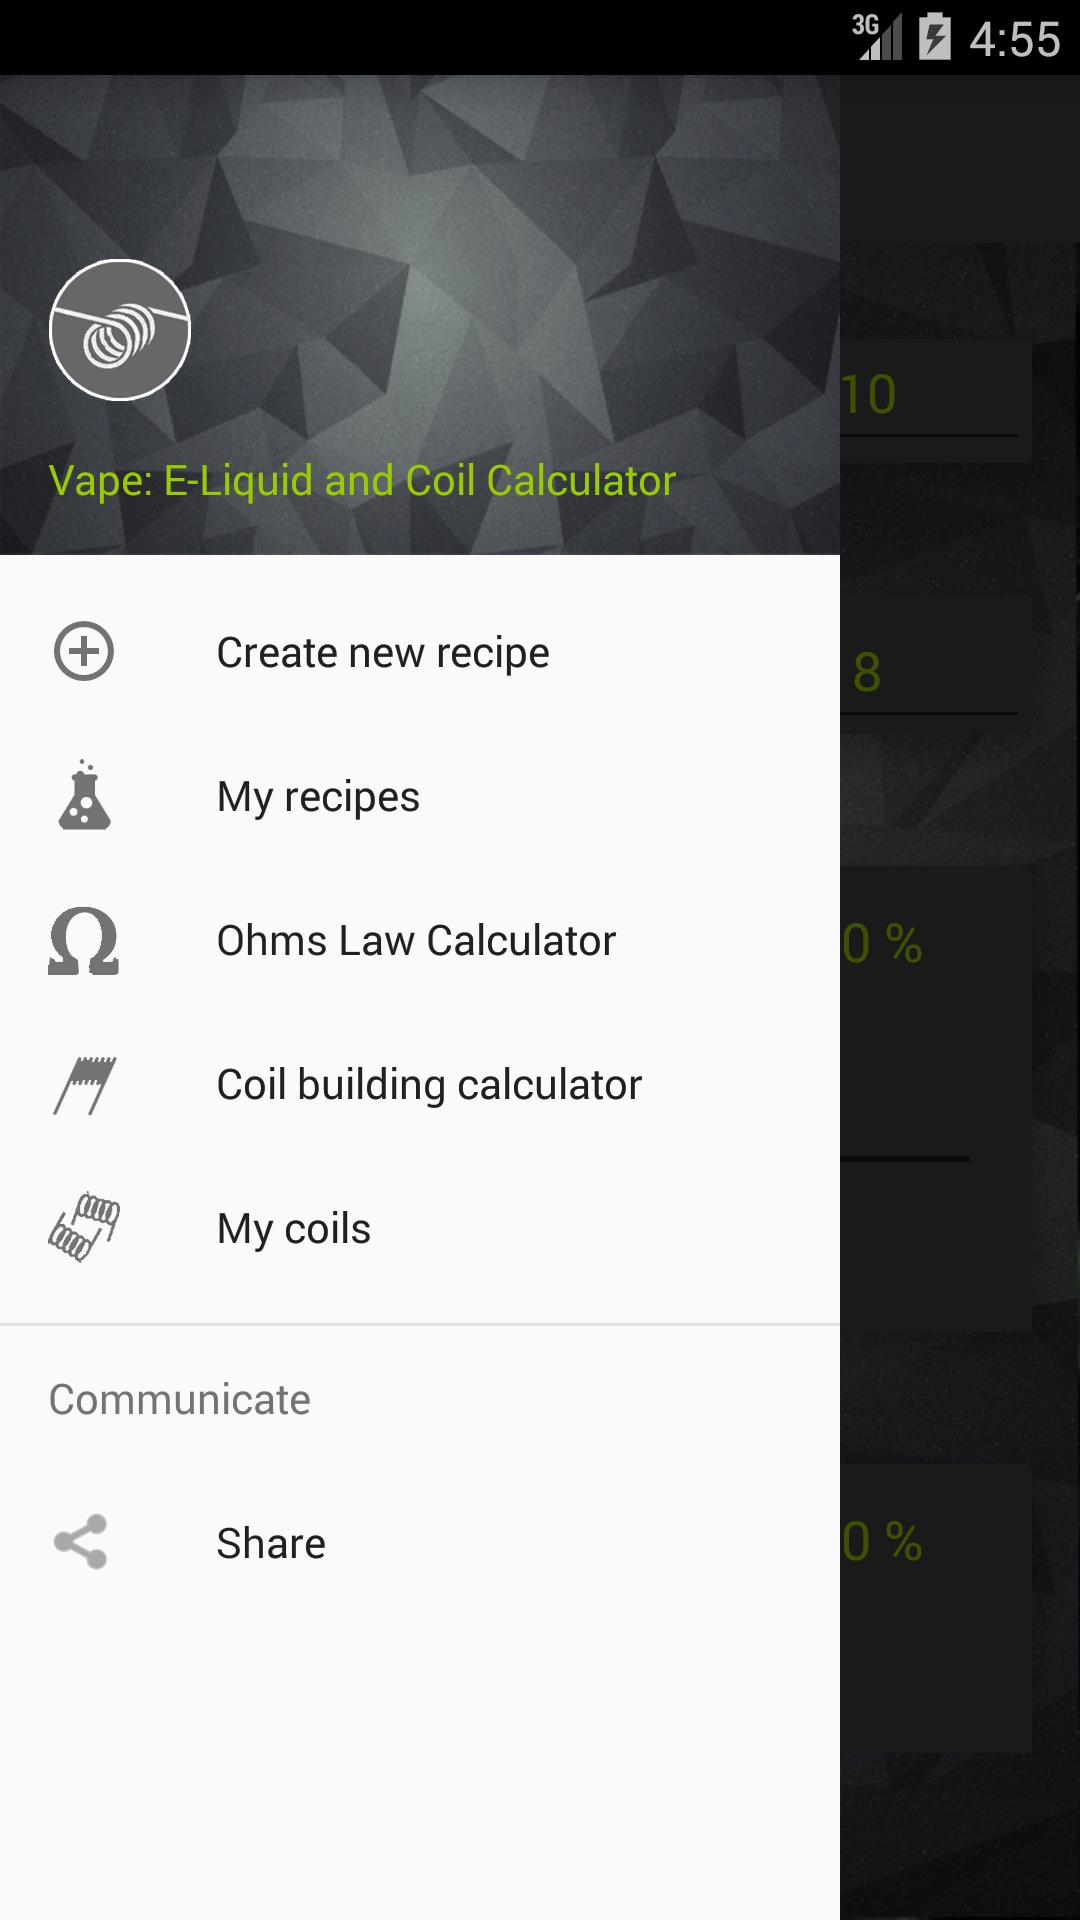 Download do APK de Vape: Calculadora E-Liquid e Coil para Android